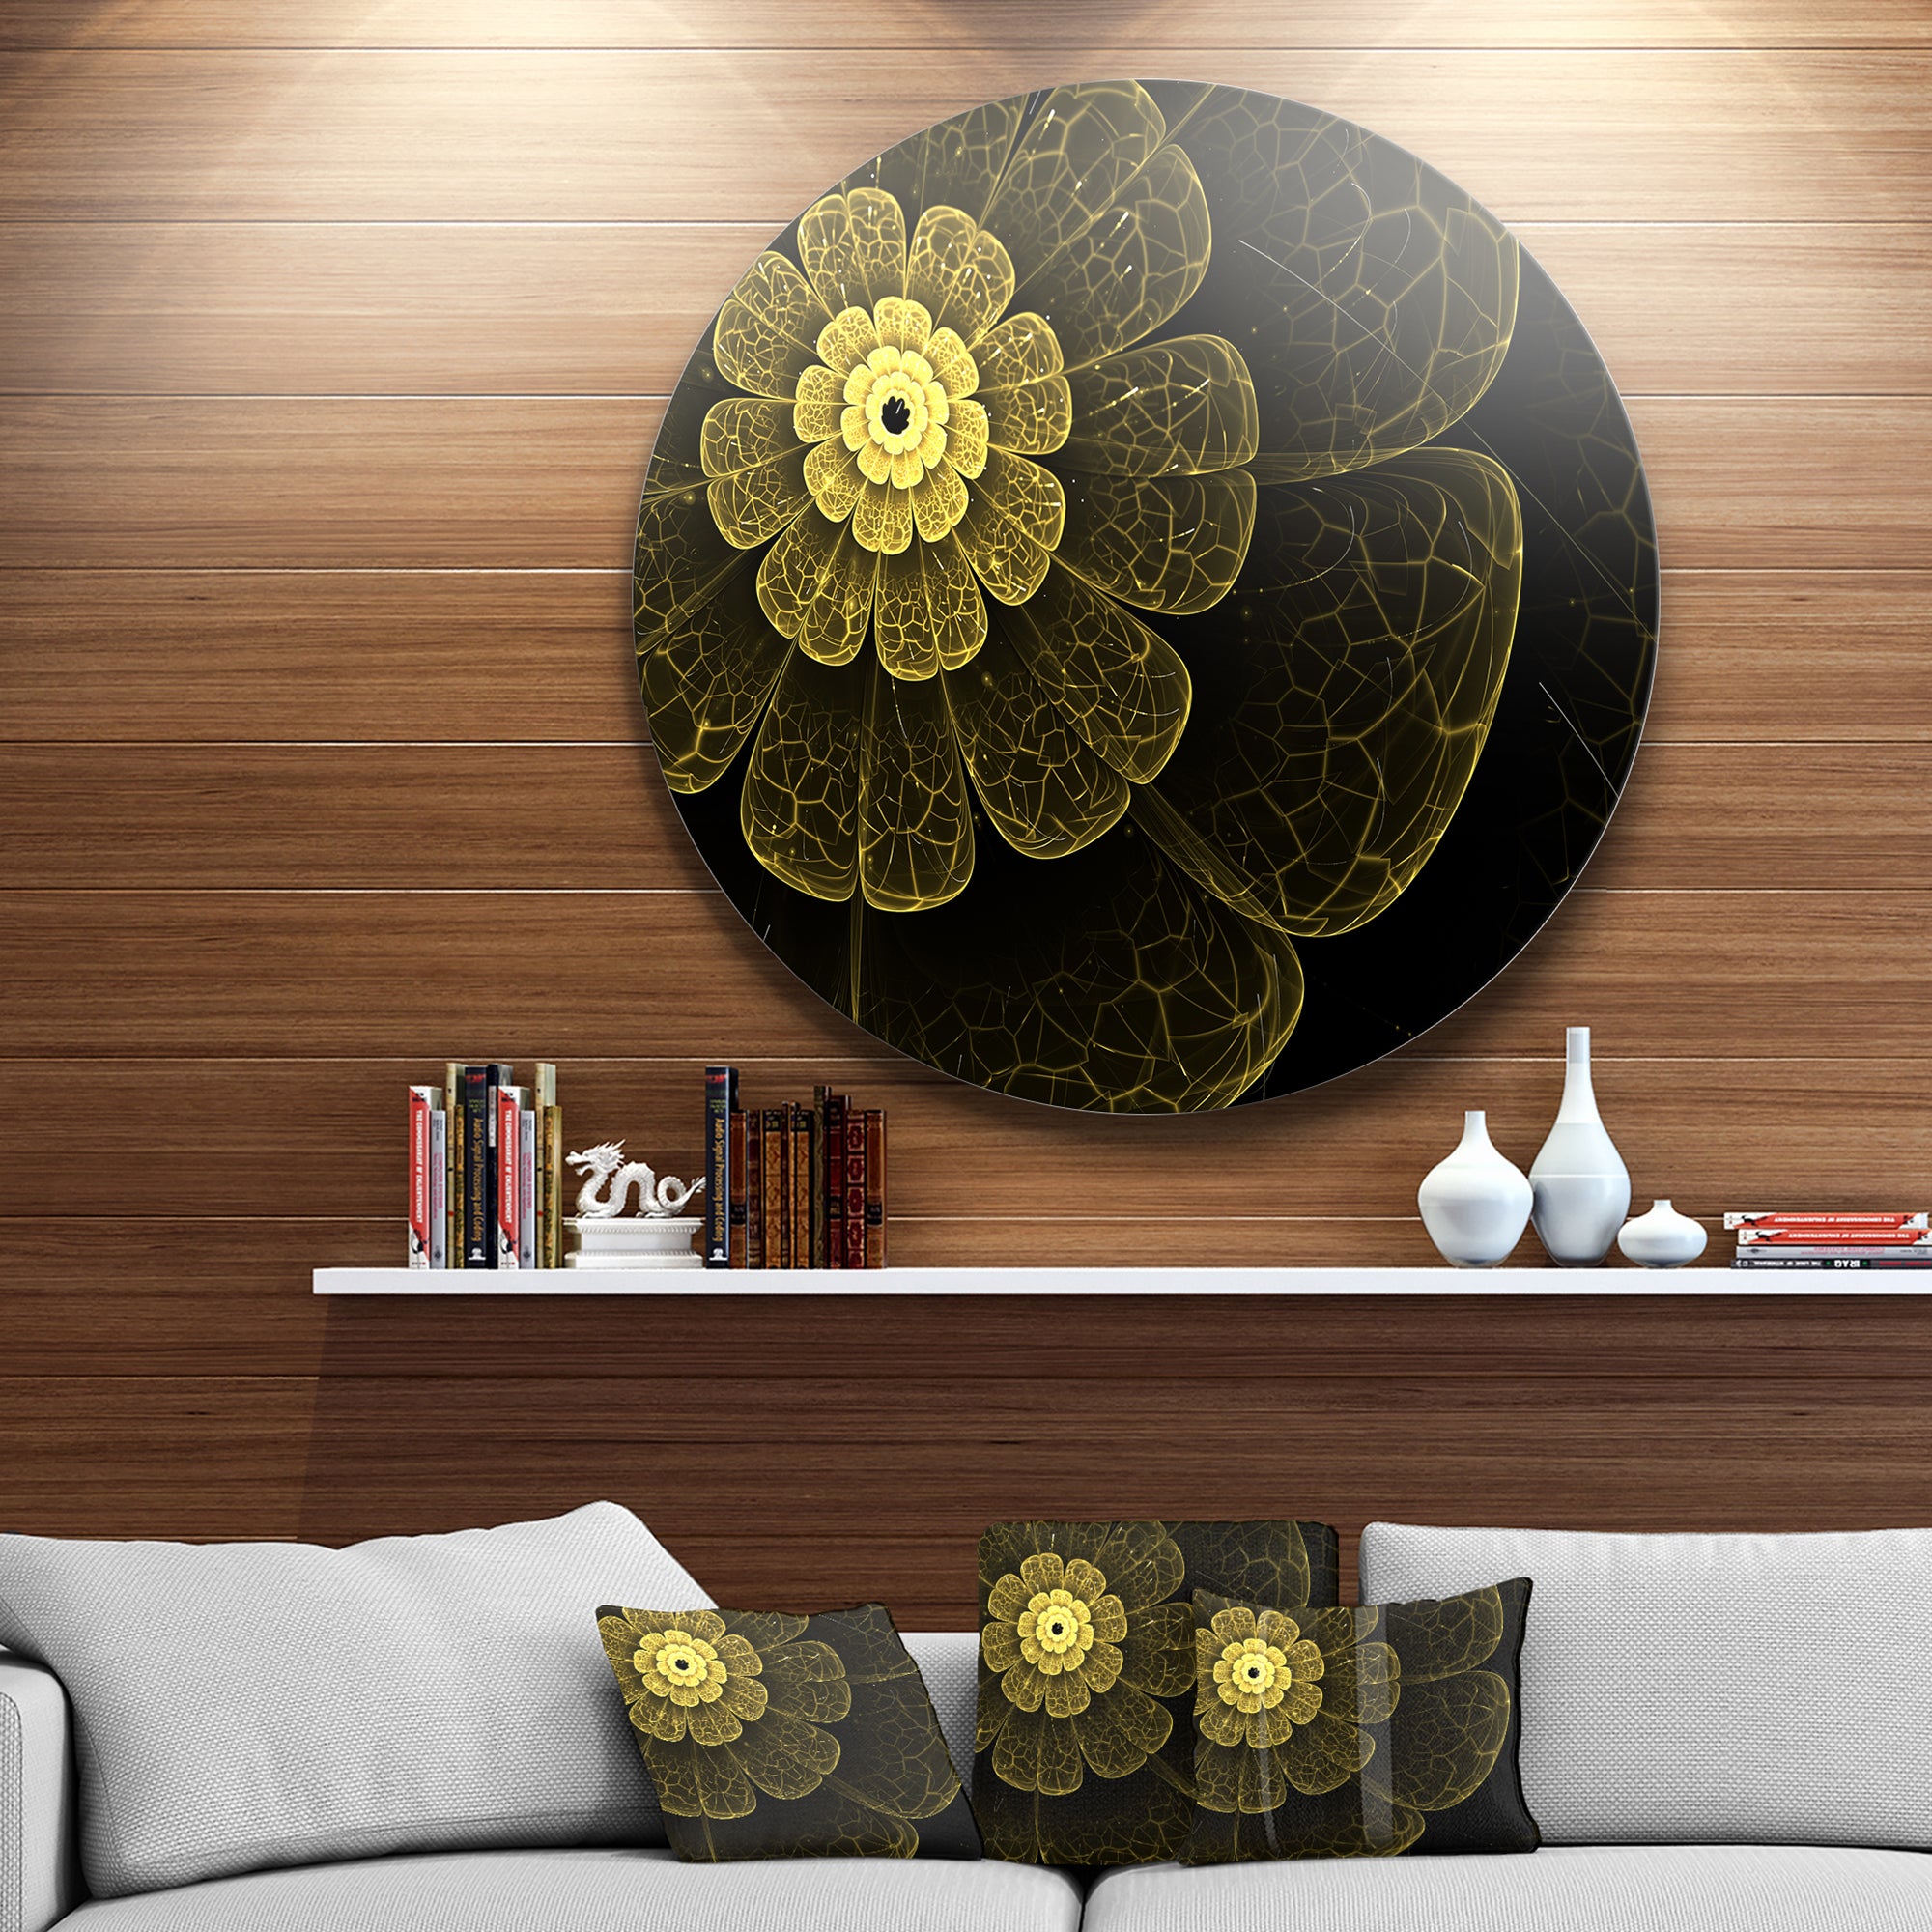 Light Yellow Metallic Fabric Flower' Disc Large Contemporary Circle Metal Wall Arts